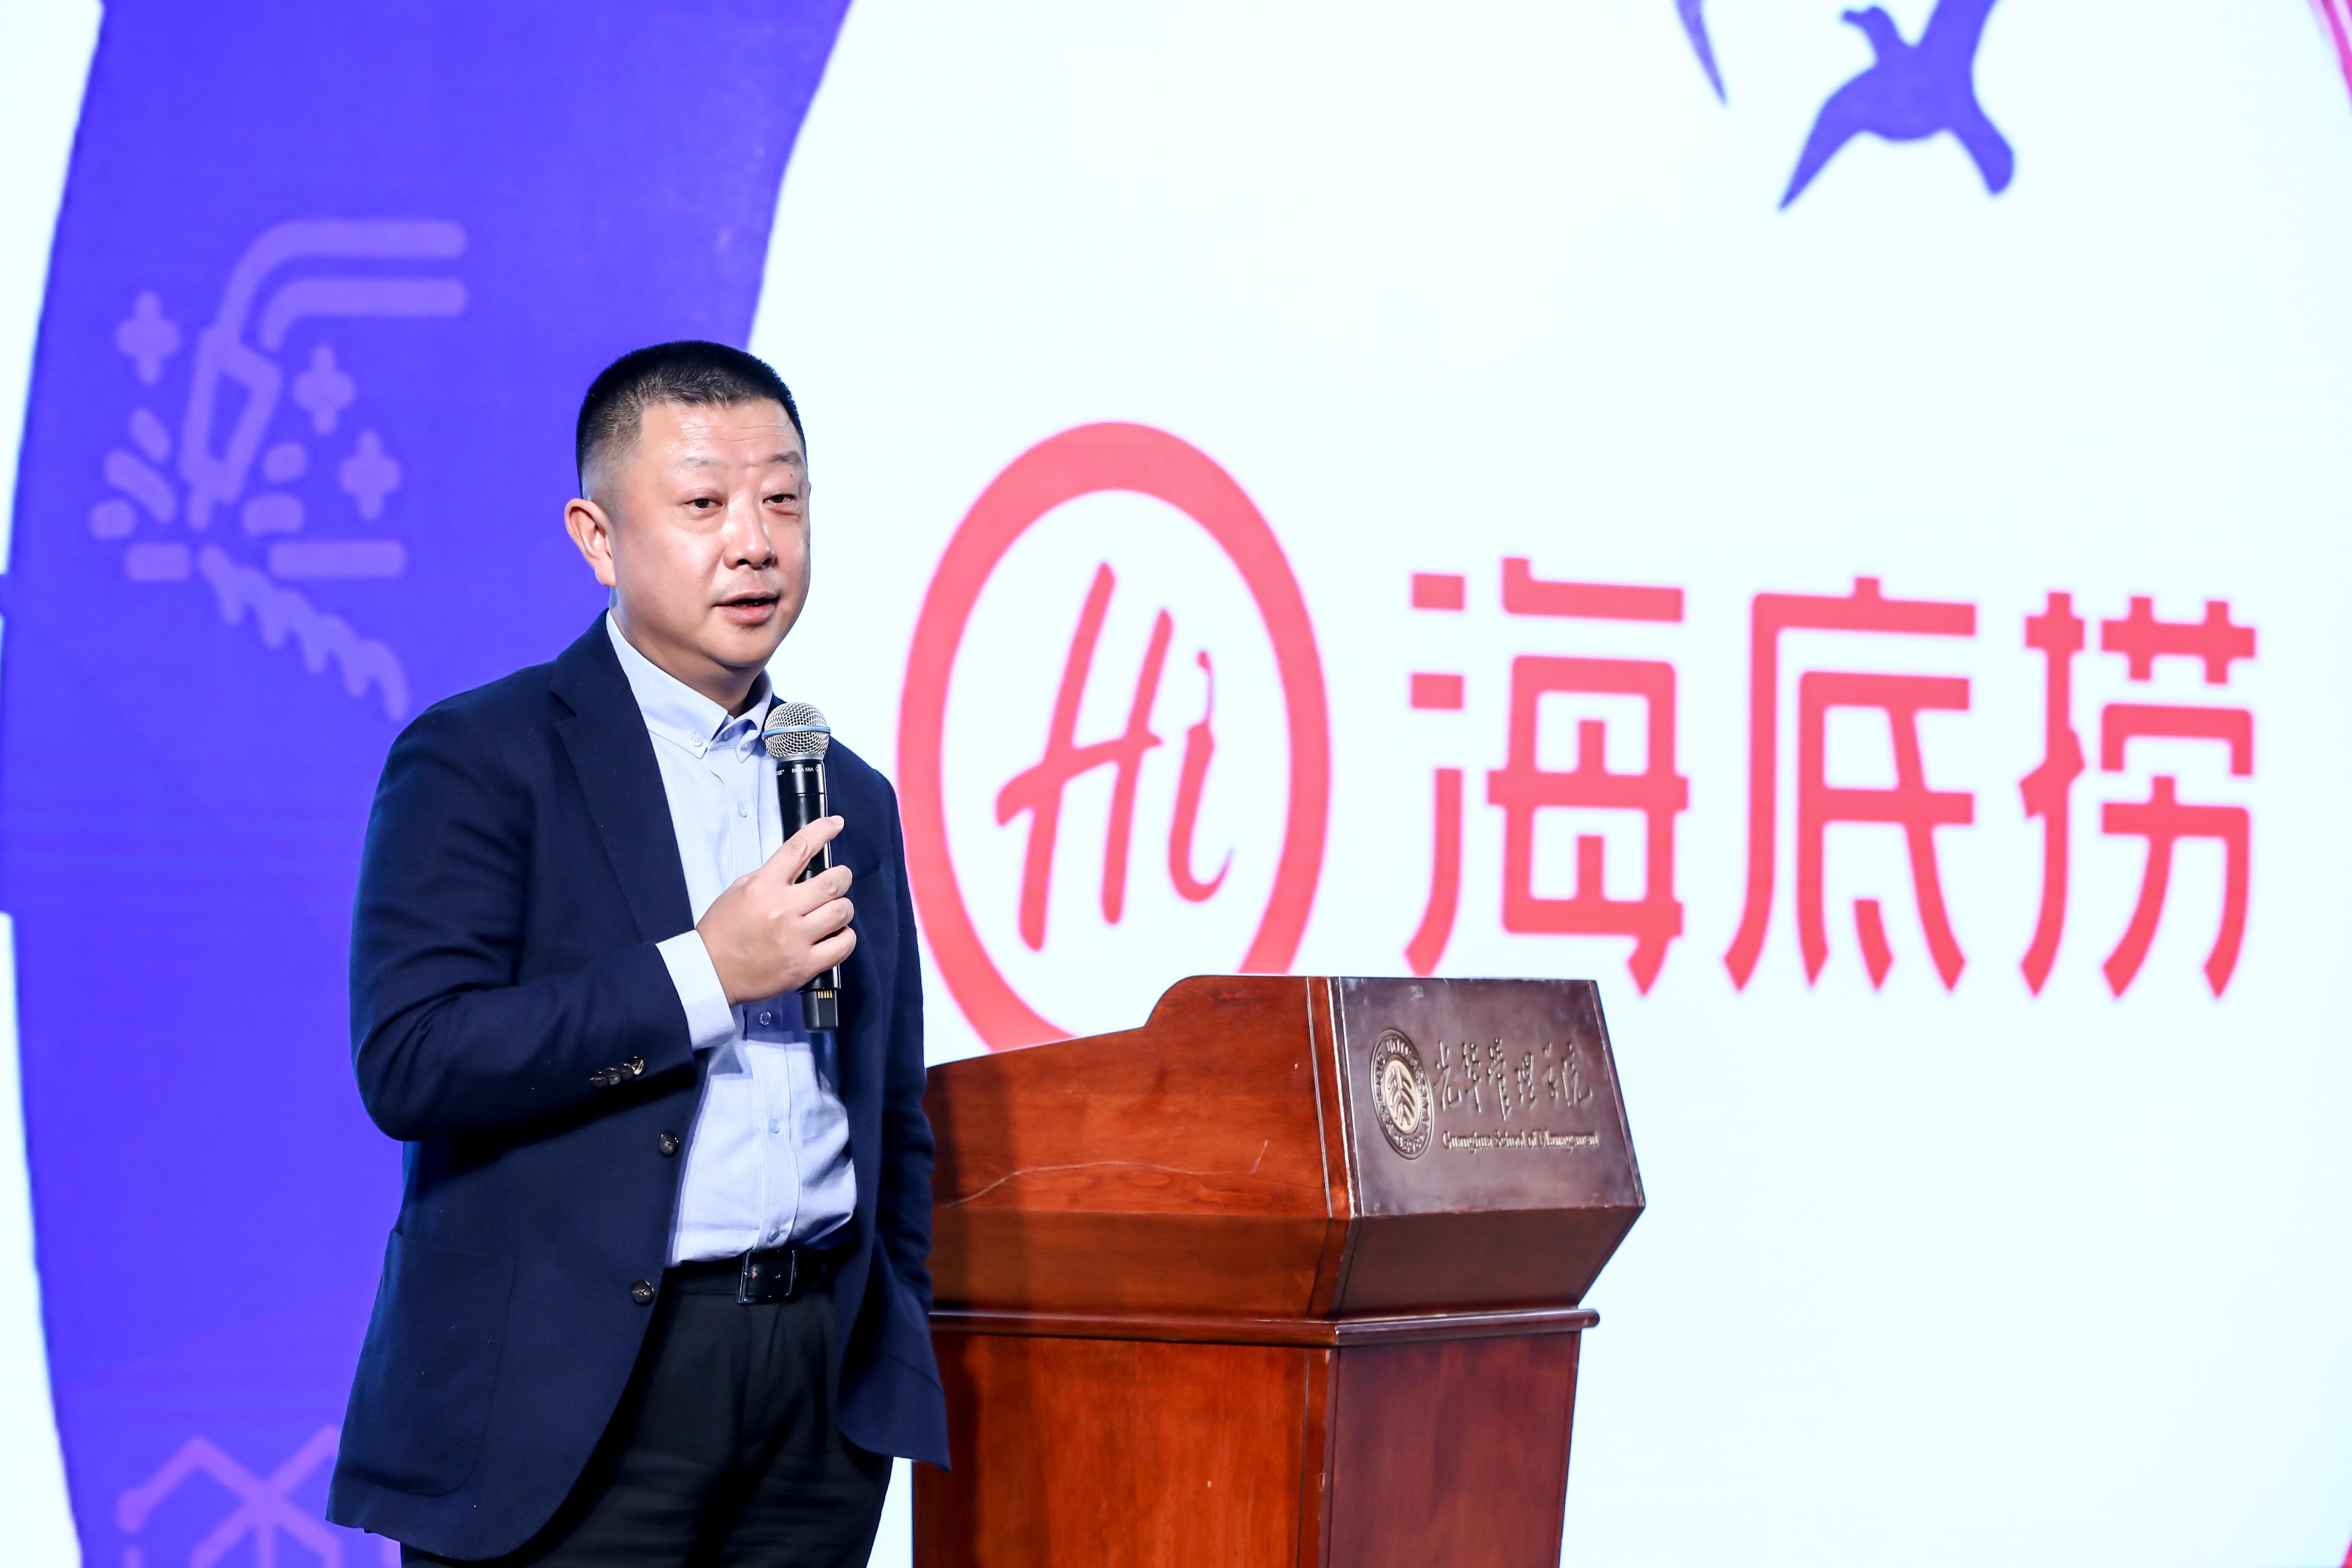 photo: Chairman of Haidilao International Holding Ltd. (Haidilao), Zhang Yong